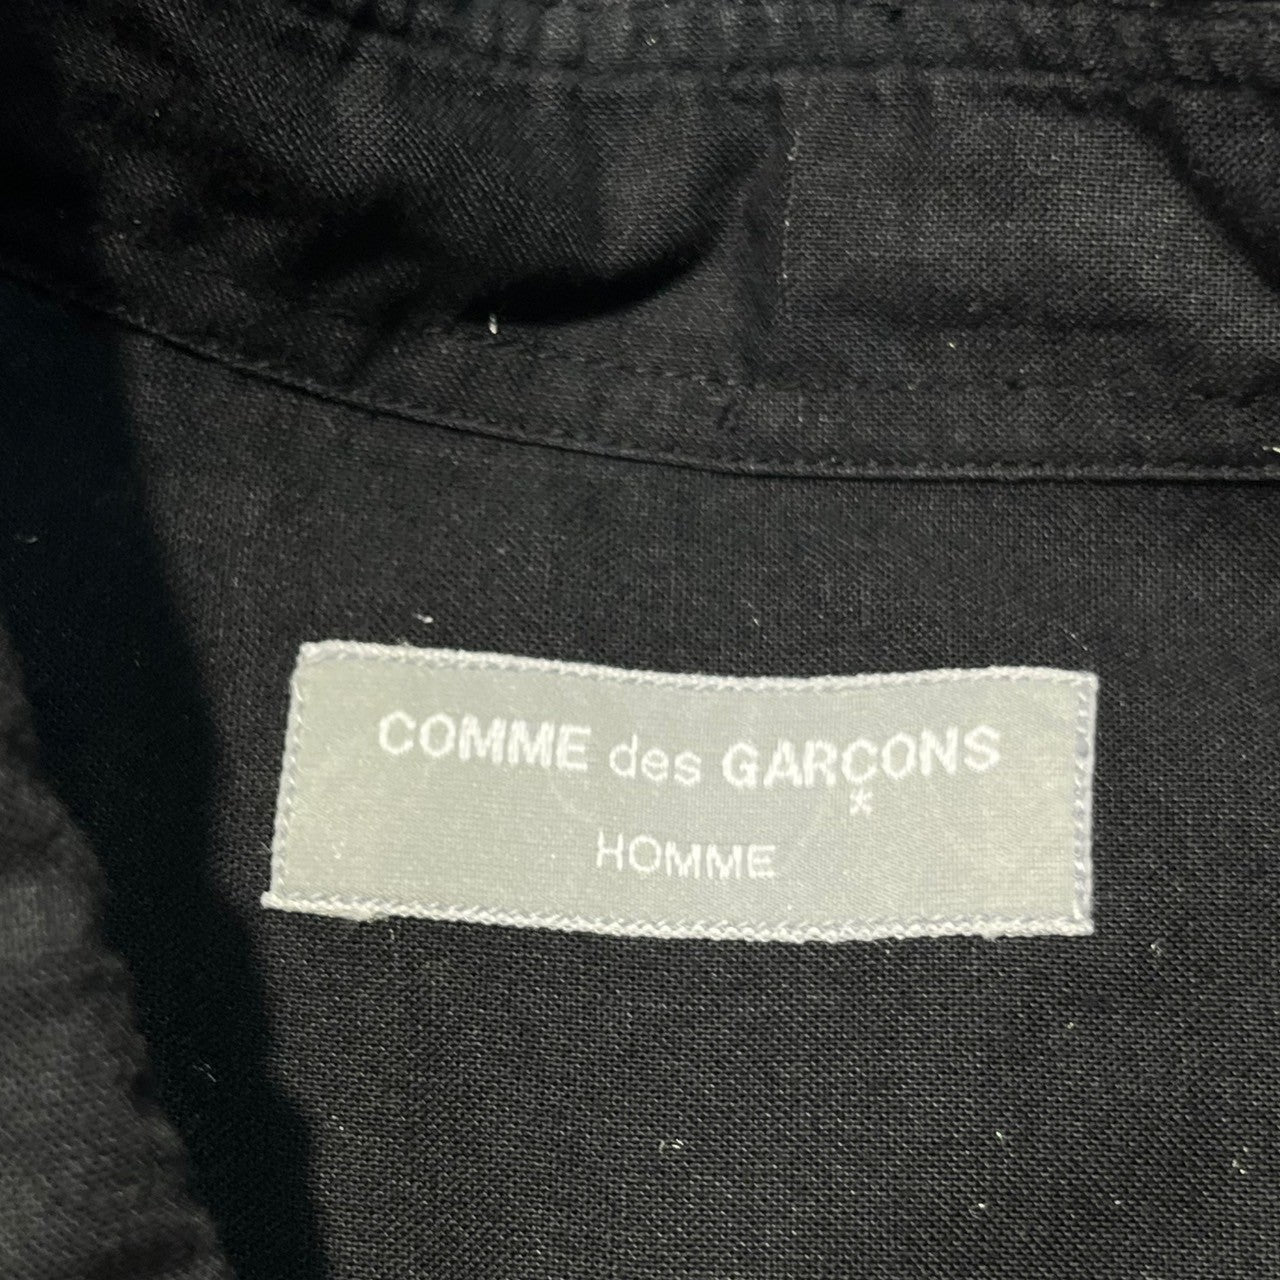 COMME des GARCONS HOMME(コムデギャルソンオム) 90'sベロアテープL/Sシャツ HB-100180 表記なし(L程度) ブラック AD1997 田中オム